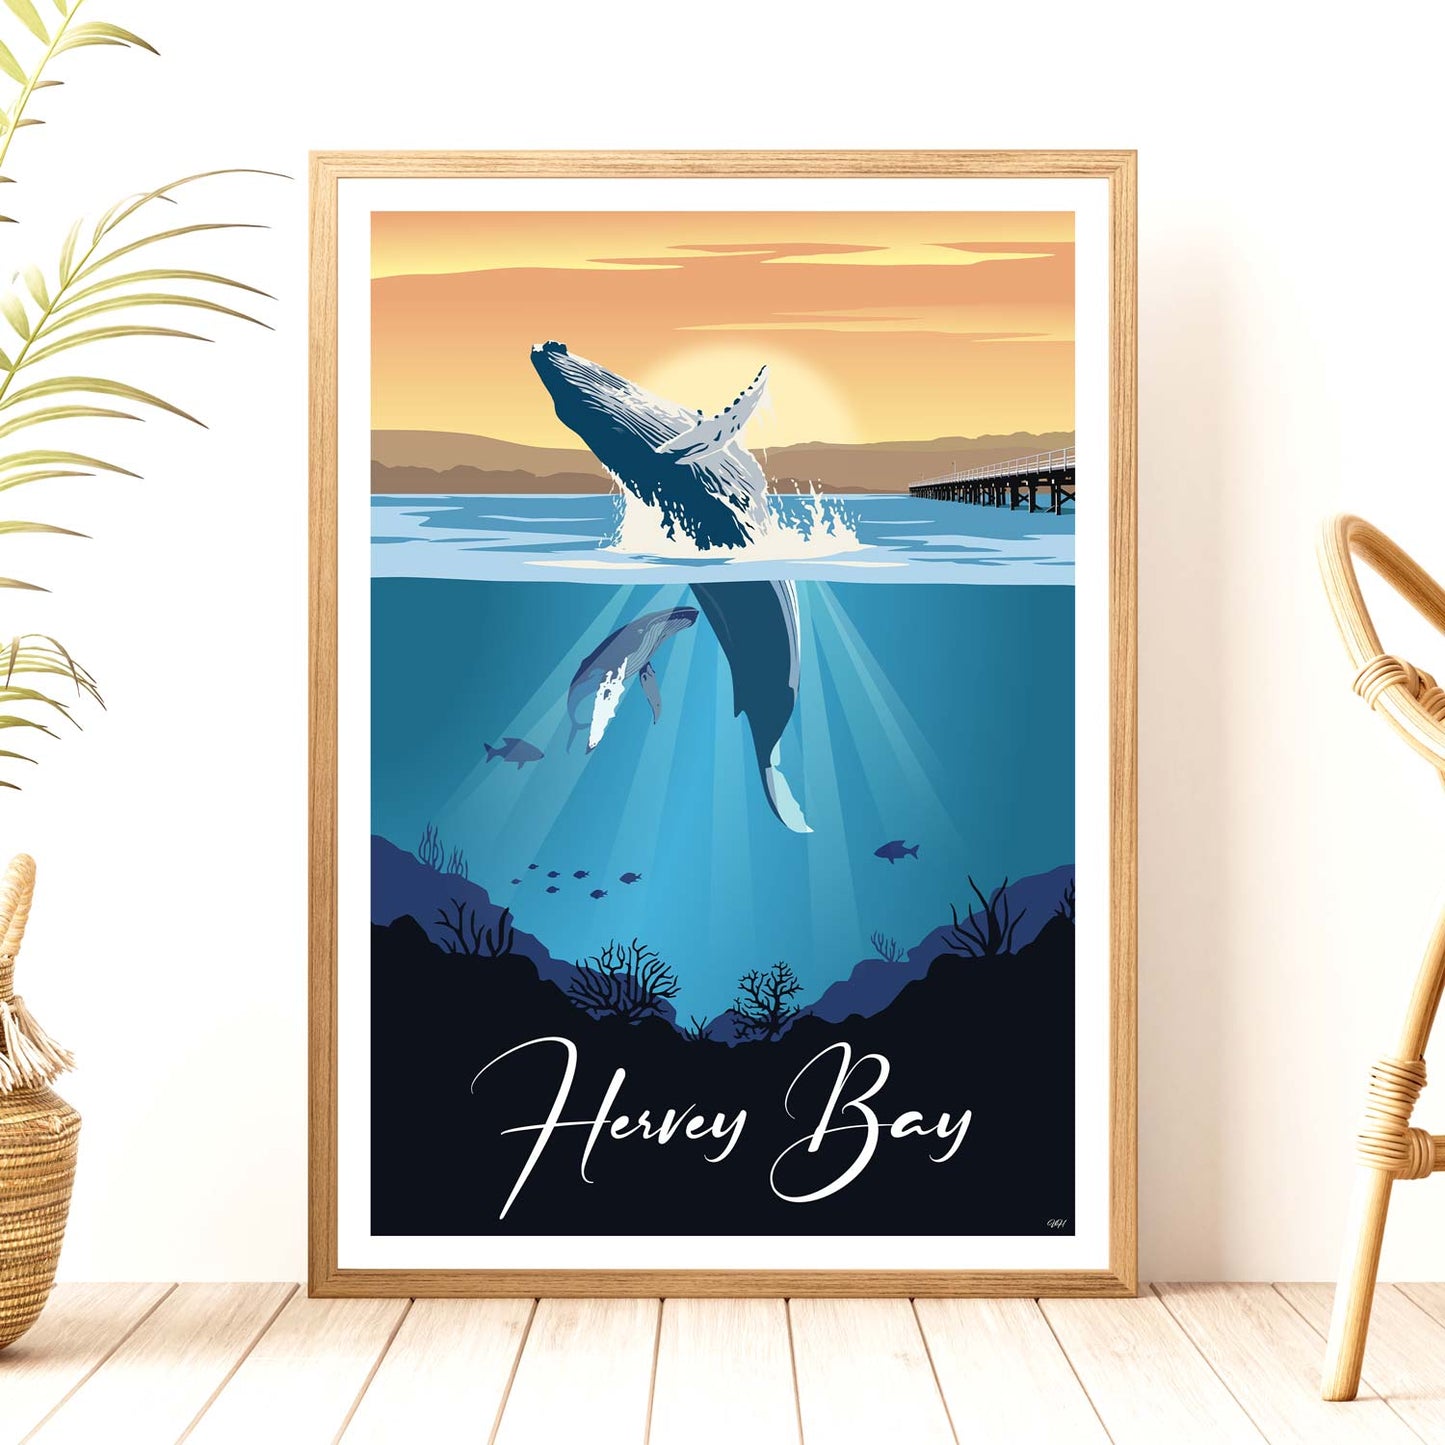 Hervey Bay Travel Poster, Queensland - Australia